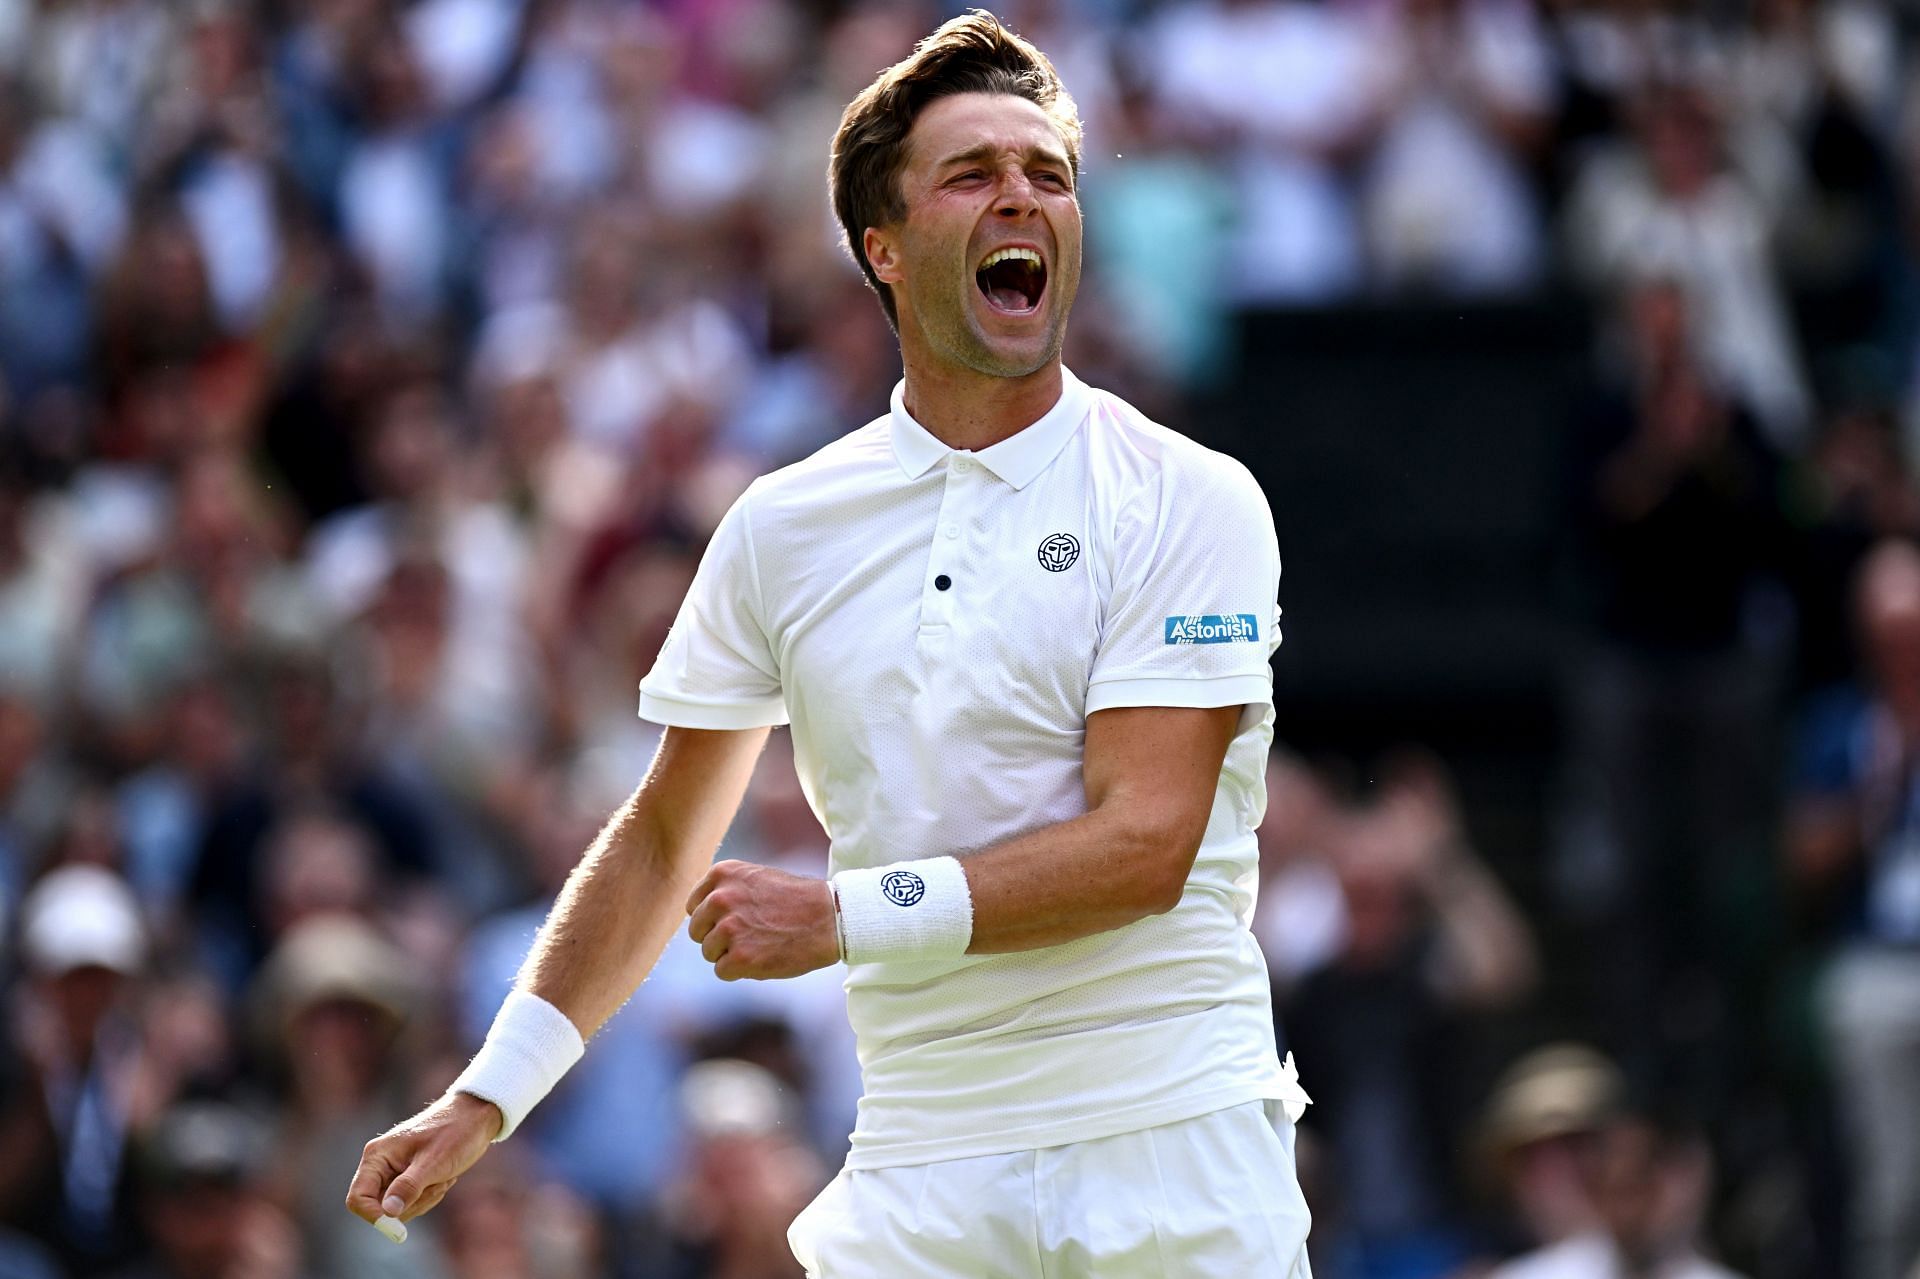 Liam Broady celebrates his victory at Wimbledon 2023